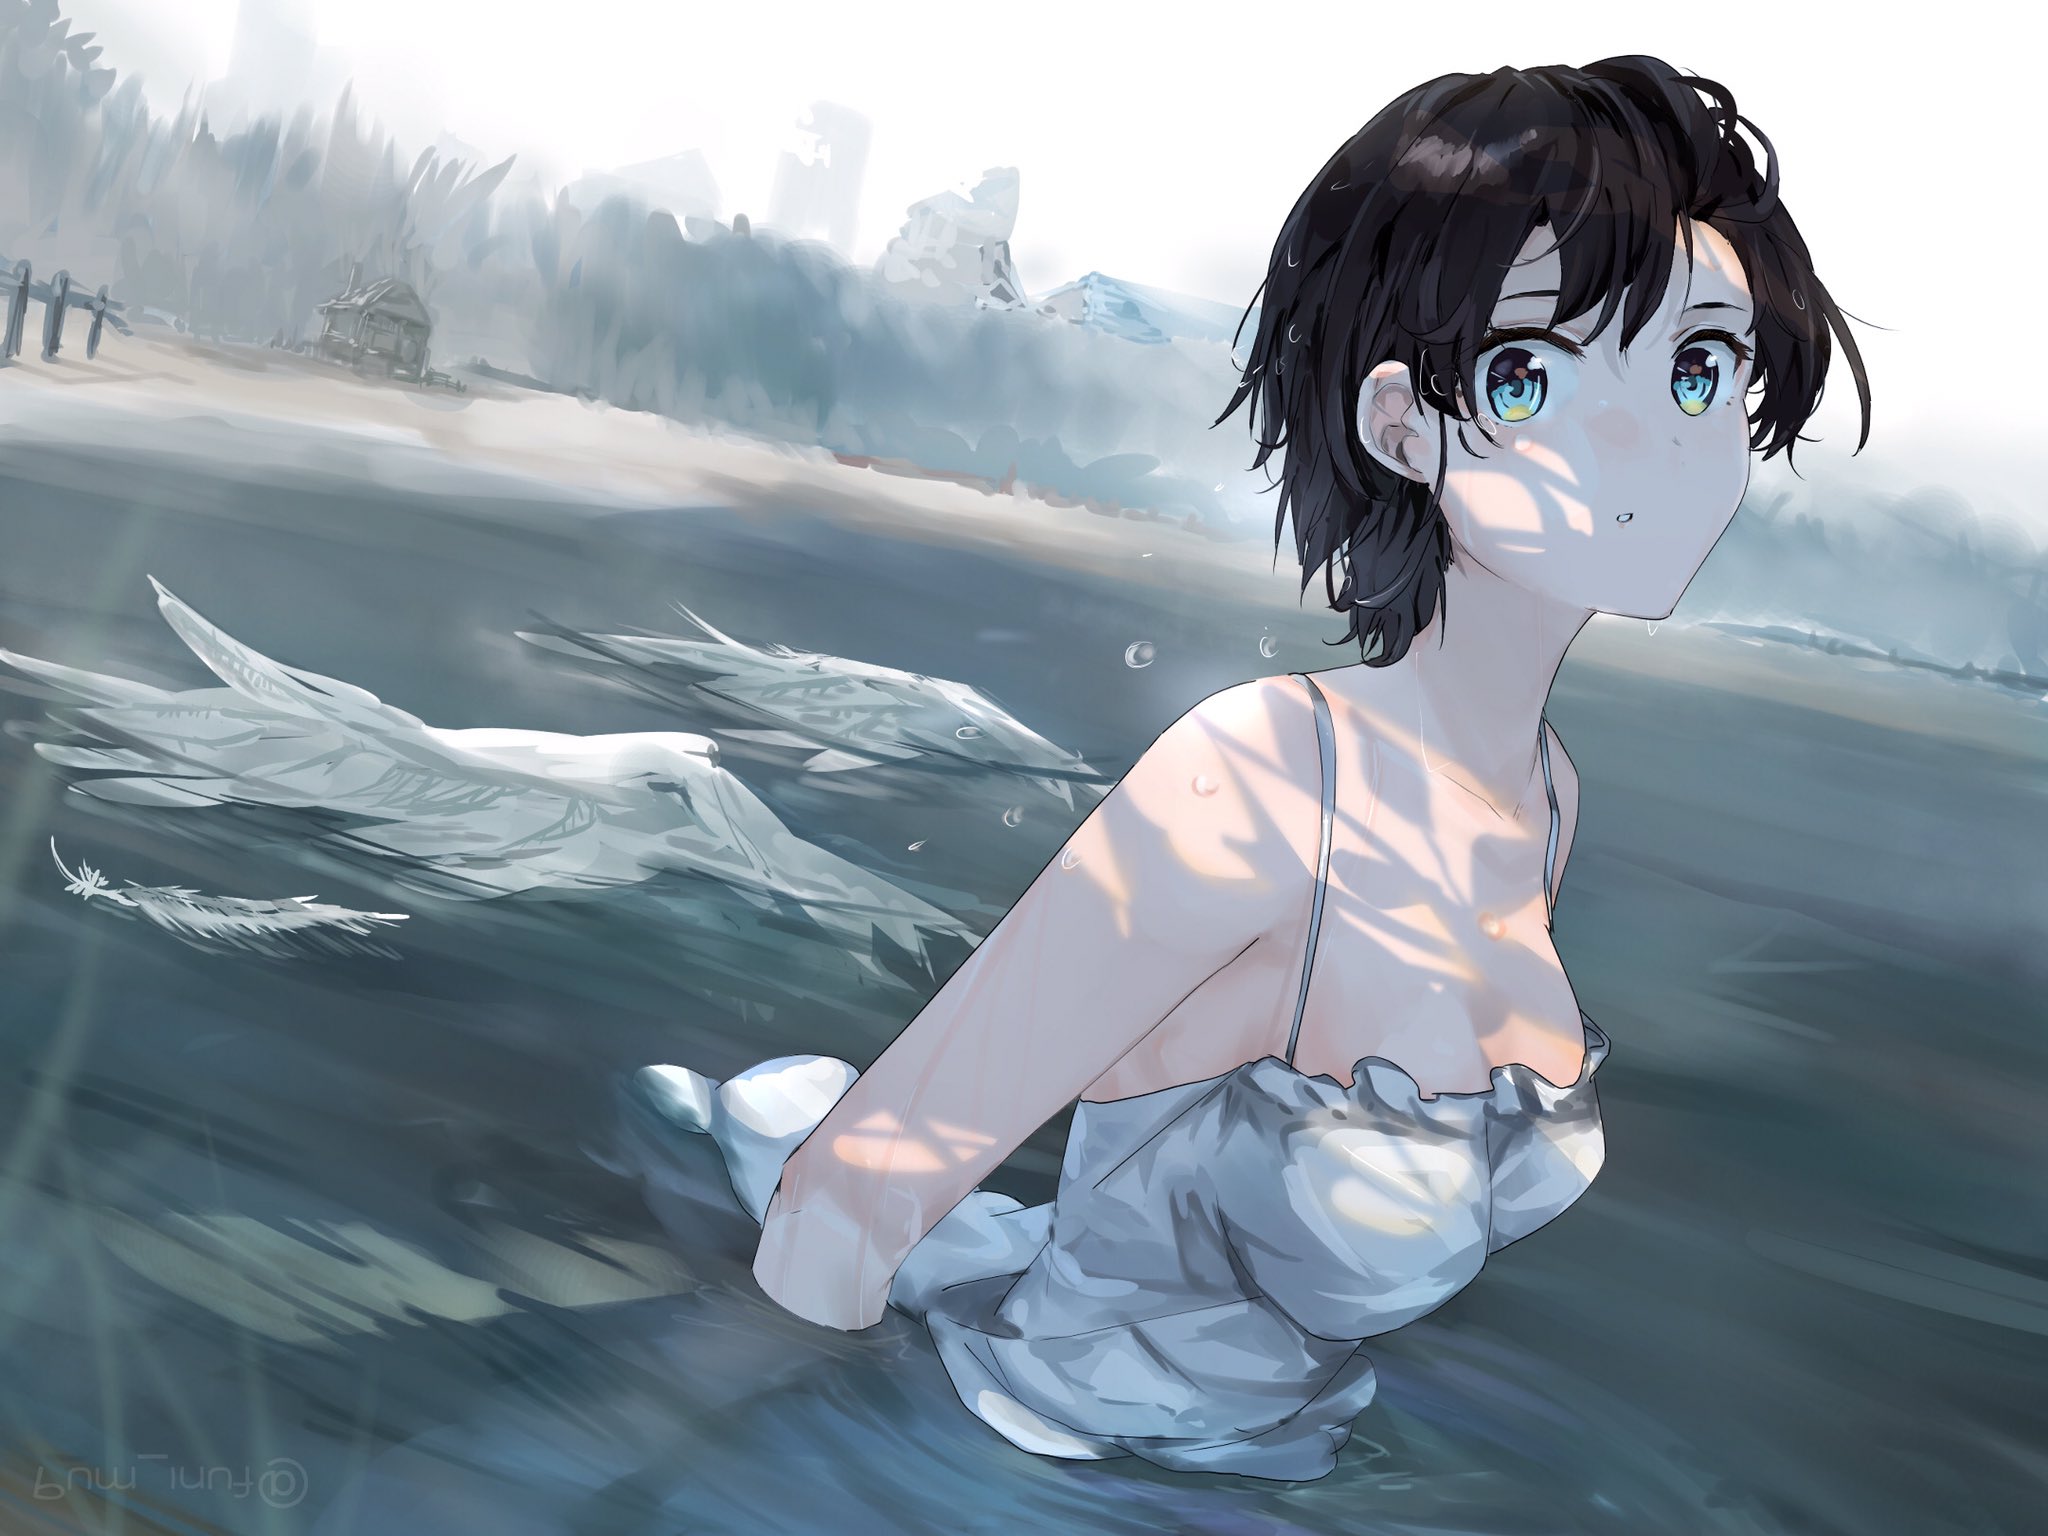 Anime 2048x1536 Hololive Oozora Subaru black hair in water blue eyes Virtual Youtuber water standing in water anime girls feathers wings